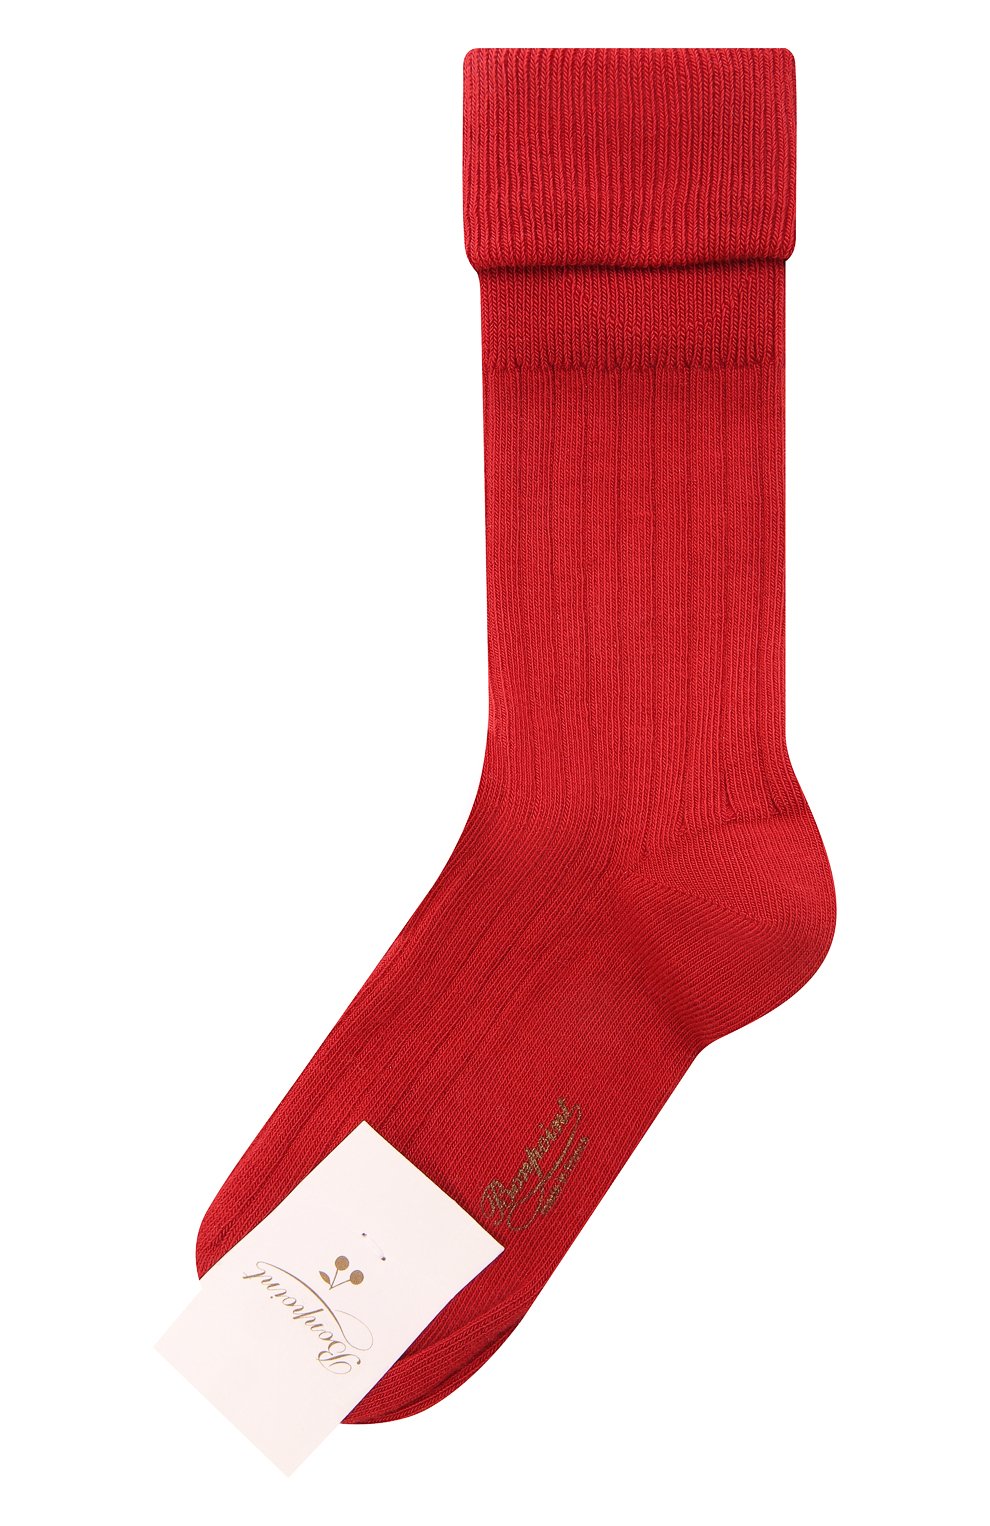 Детские носки BONPOINT красного цвета, арт. H20BGICOTFIF(051)_823547 | Фото 1 (Материал: Текстиль, Хлопок; Кросс-КТ: Носки)